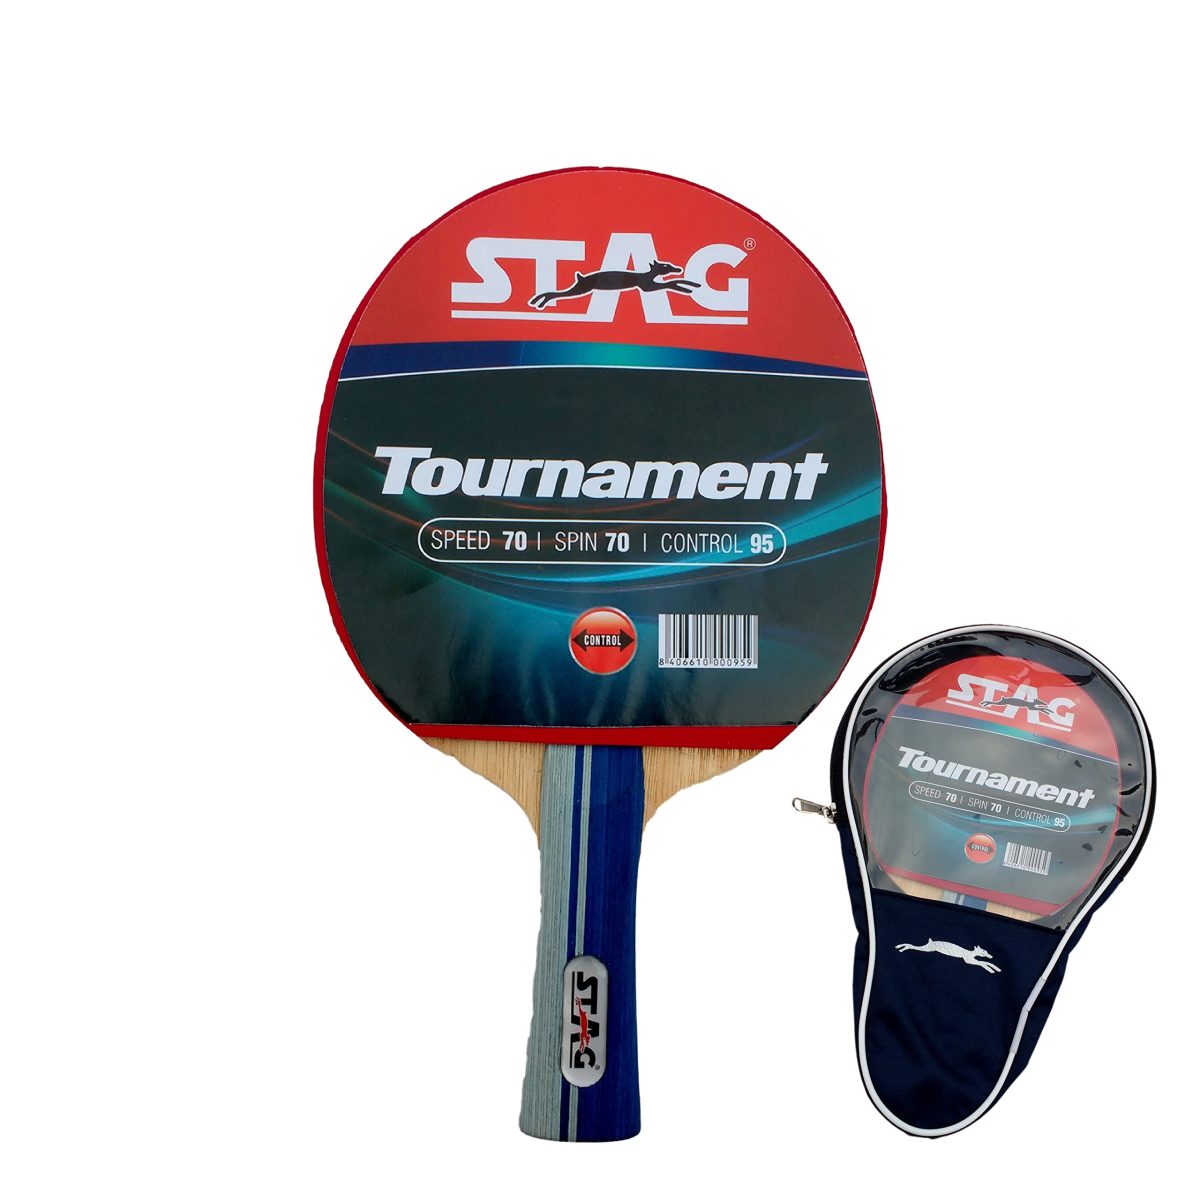 Stag Tournament Table Tennis Readymade Racquet/bat